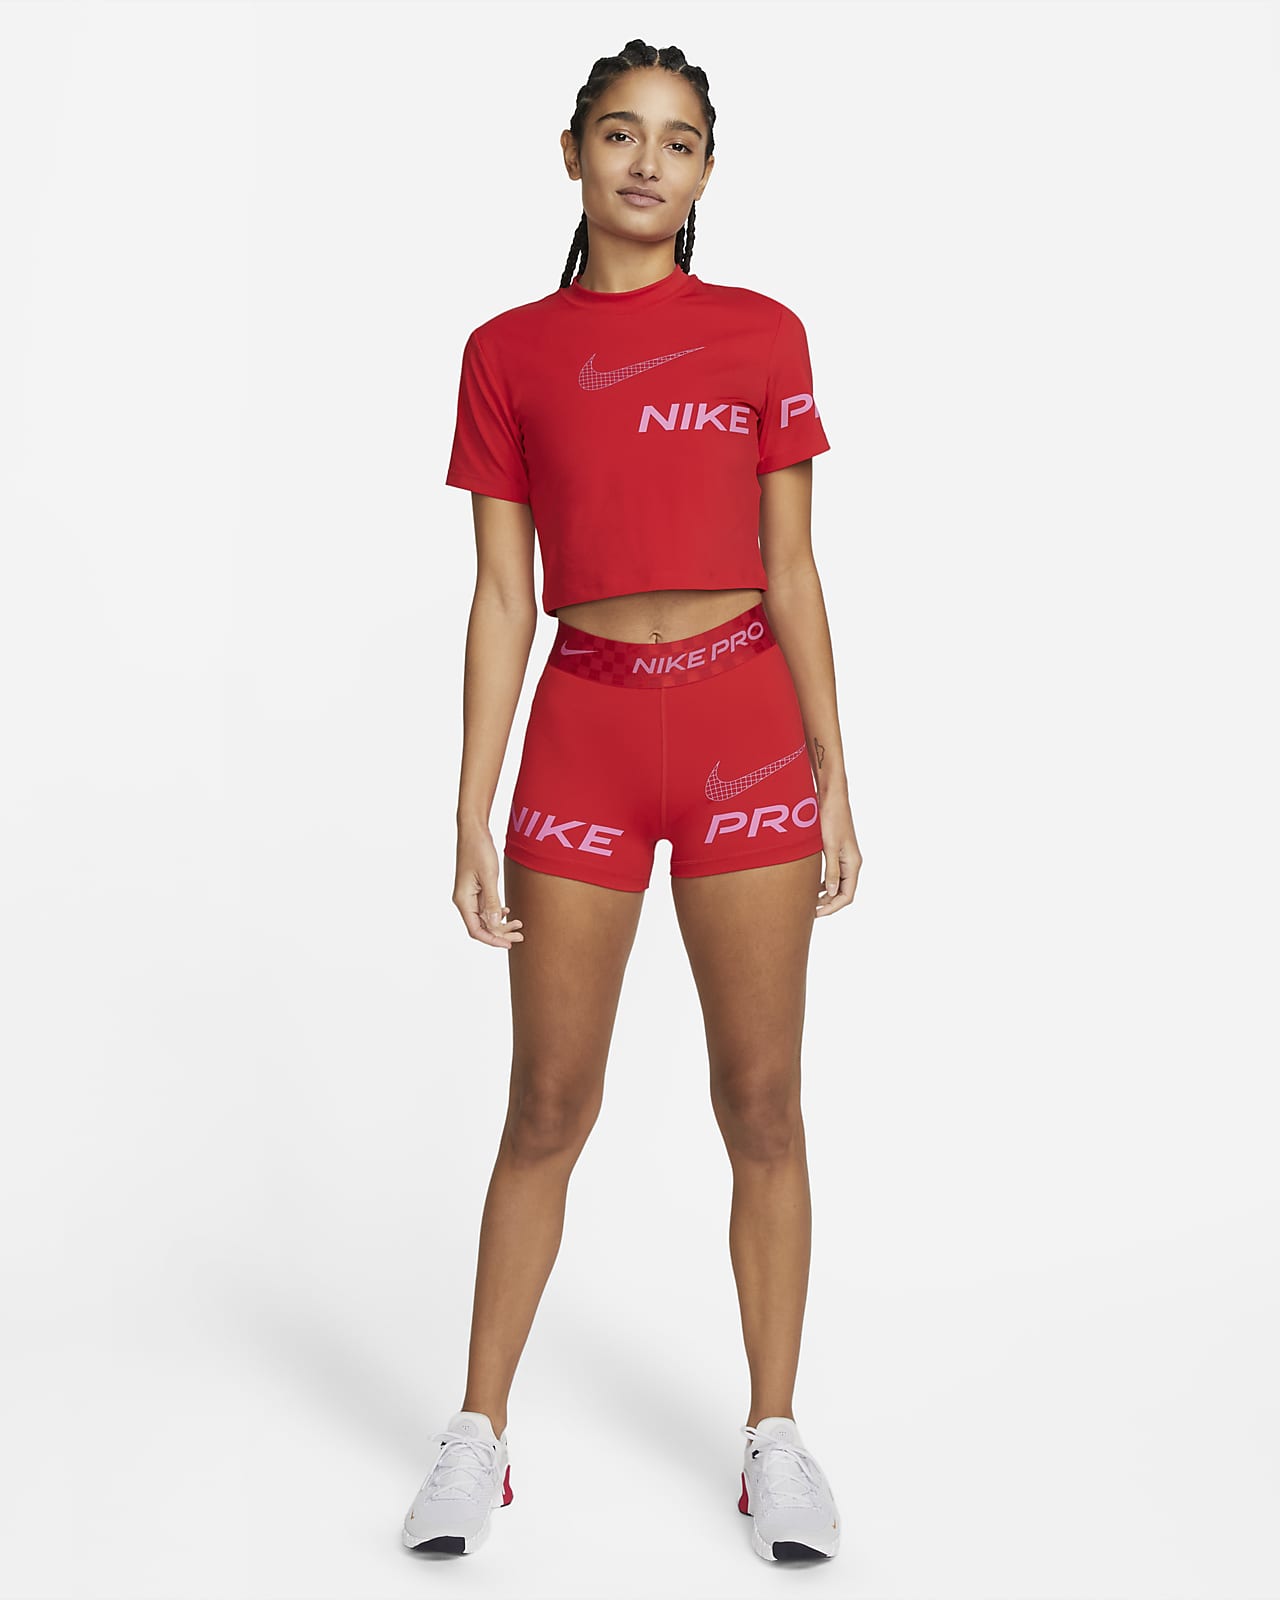 Nike Training Pro 365 Dri-FIT 3 inch booty shorts in grey